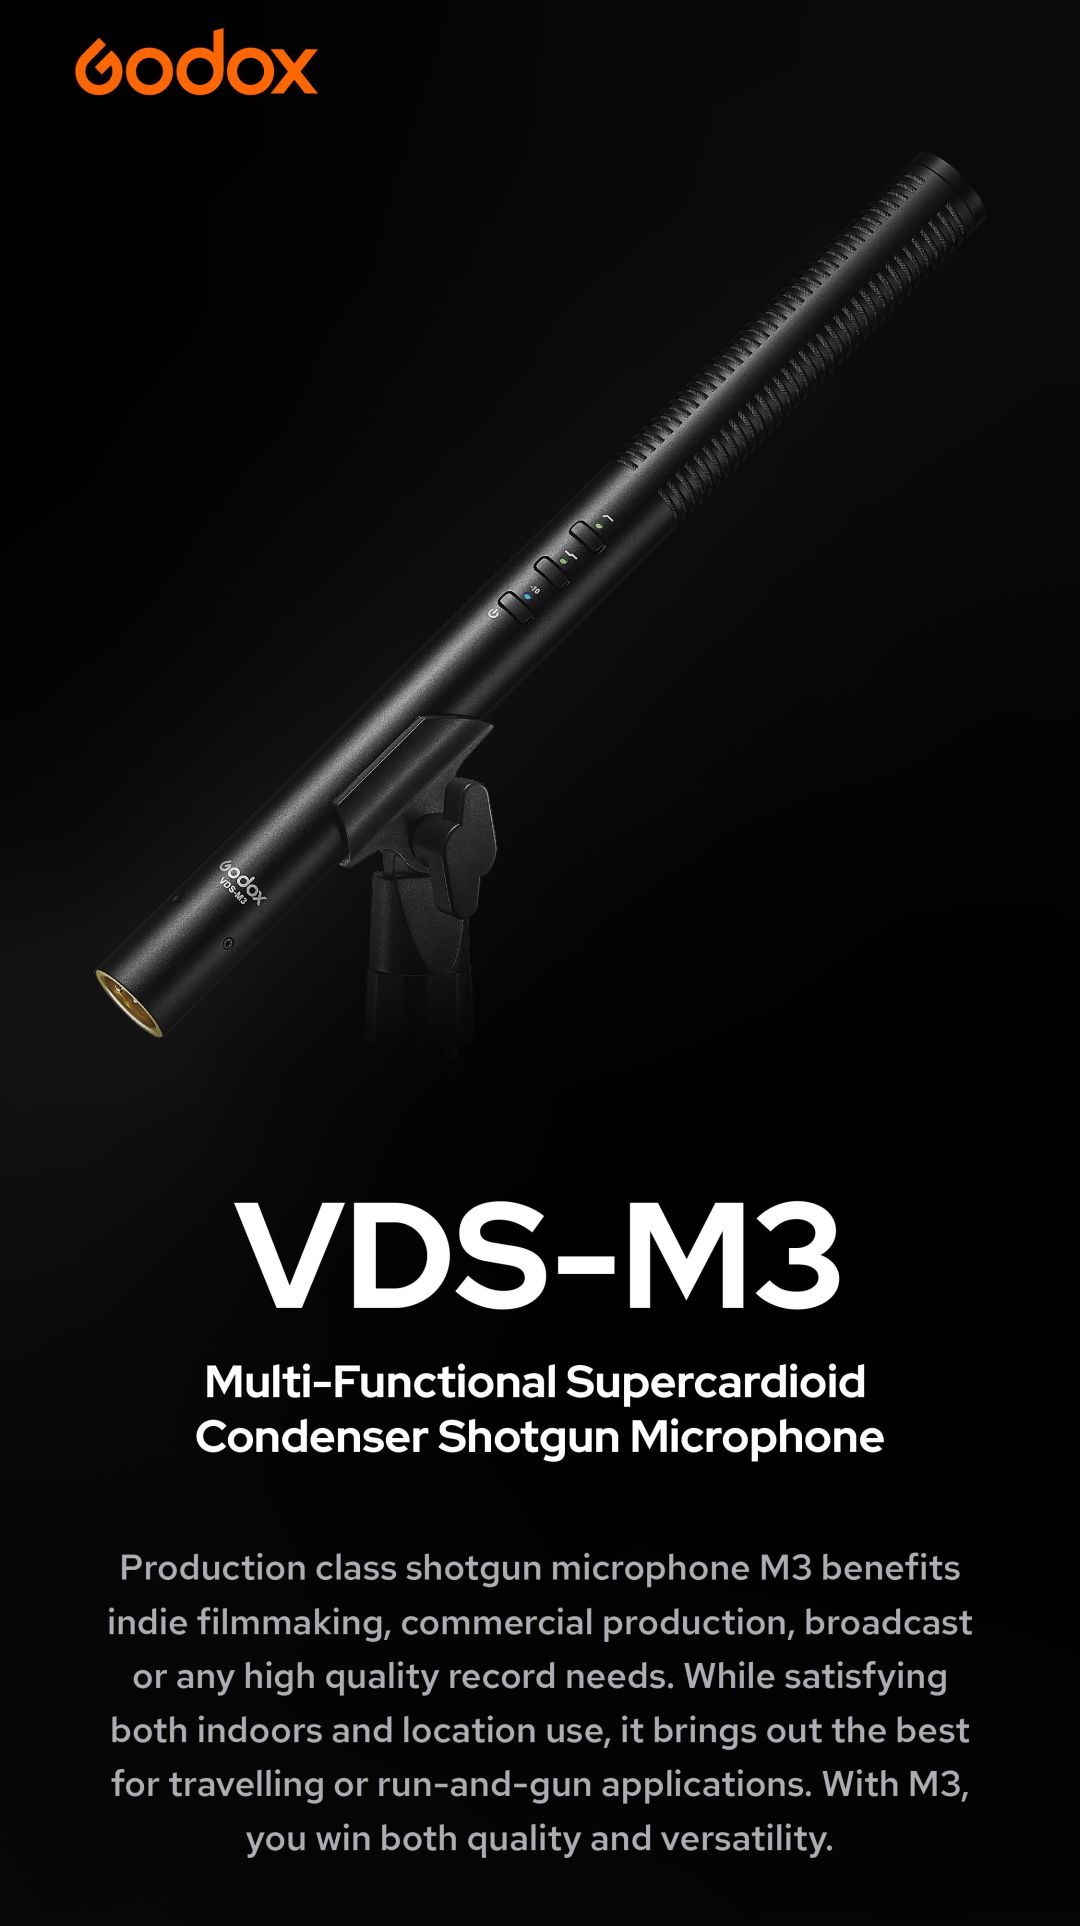 VDS-M3 Multi-Functional Supercardioid Condenser Shotgun Microphone